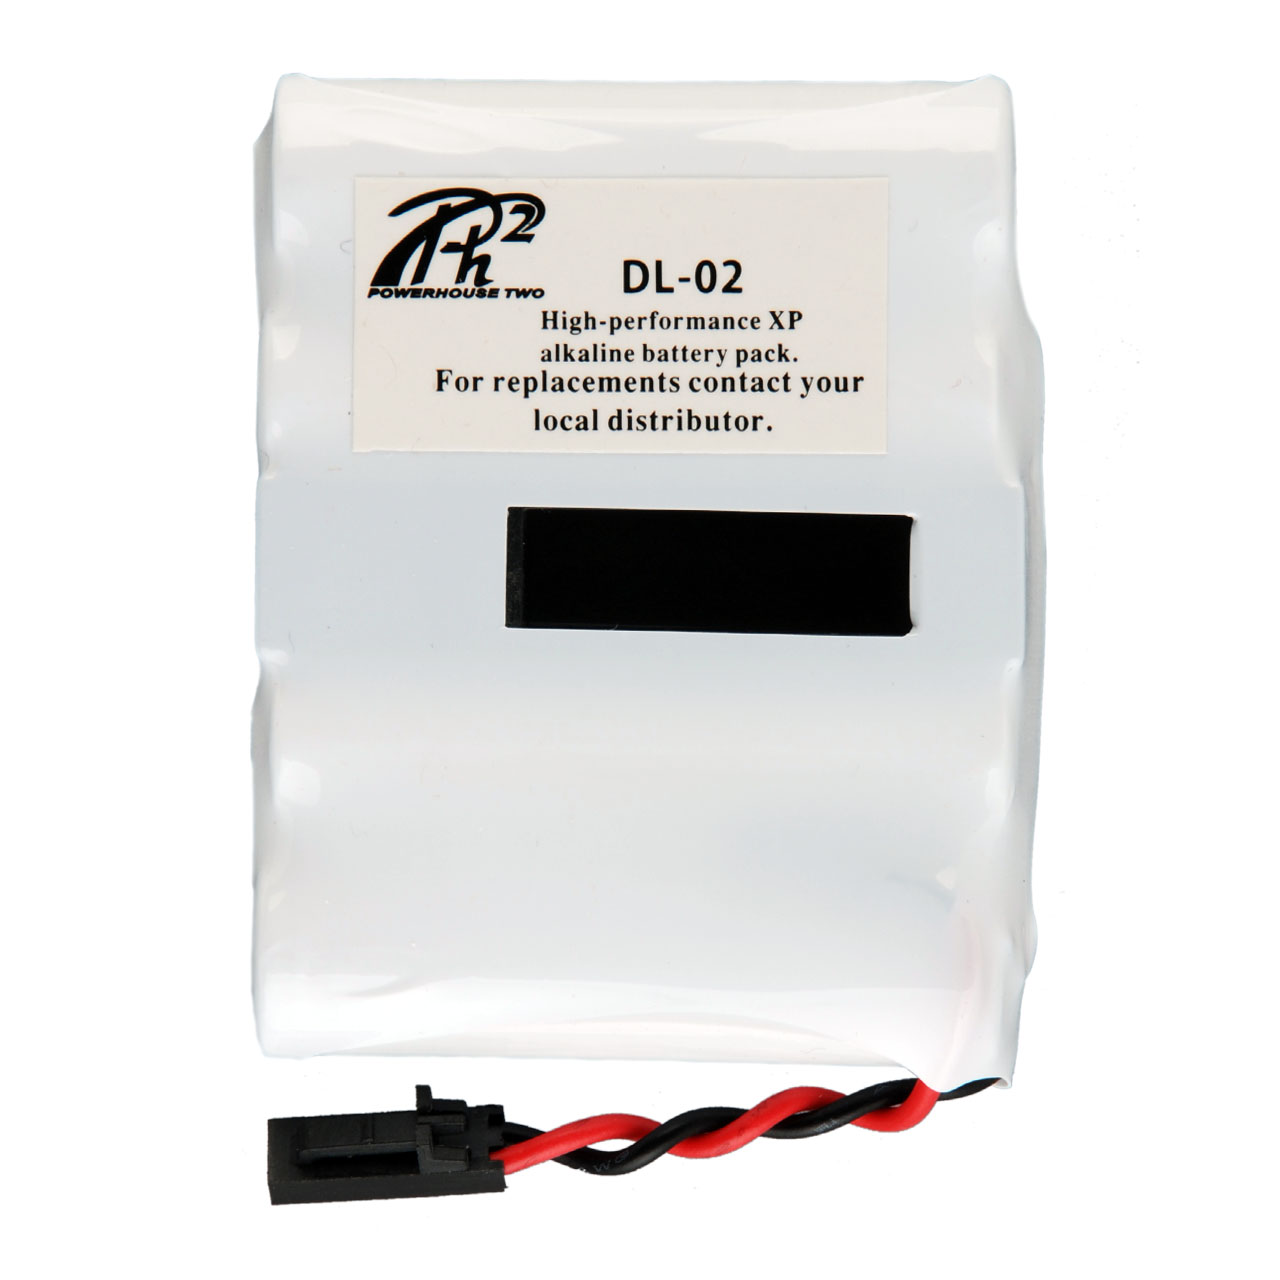 DL-02 Hospitality Battery Pack